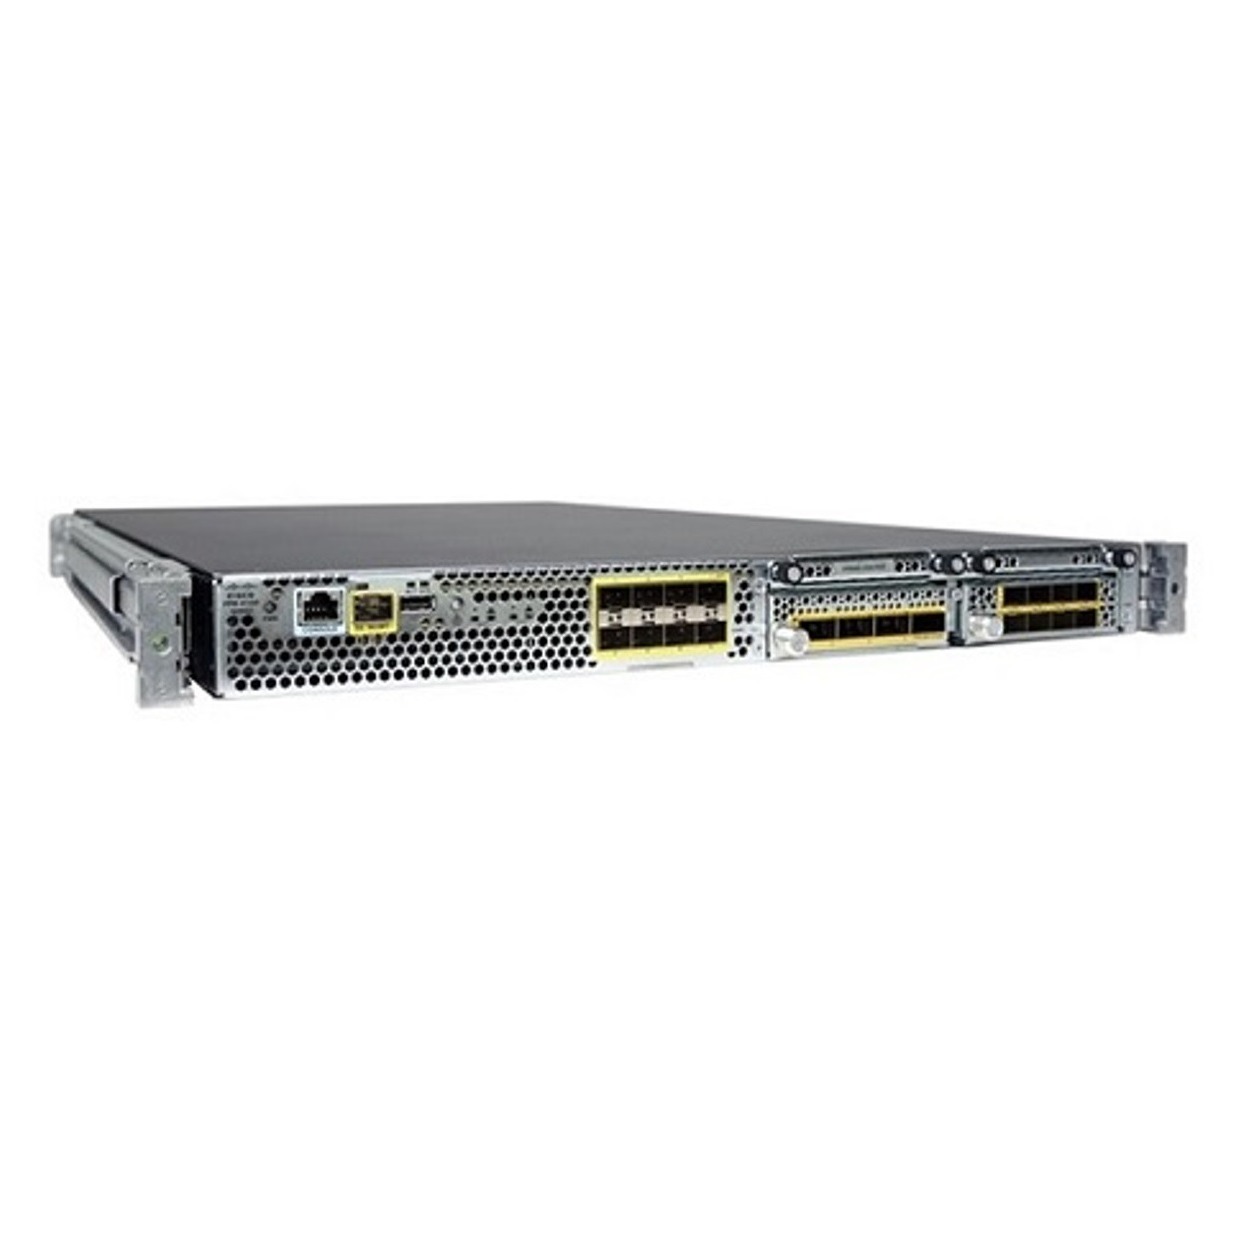 Cisco Firepower 4125 NGFW Appliance, 1RU, 2 x Network Module Bays